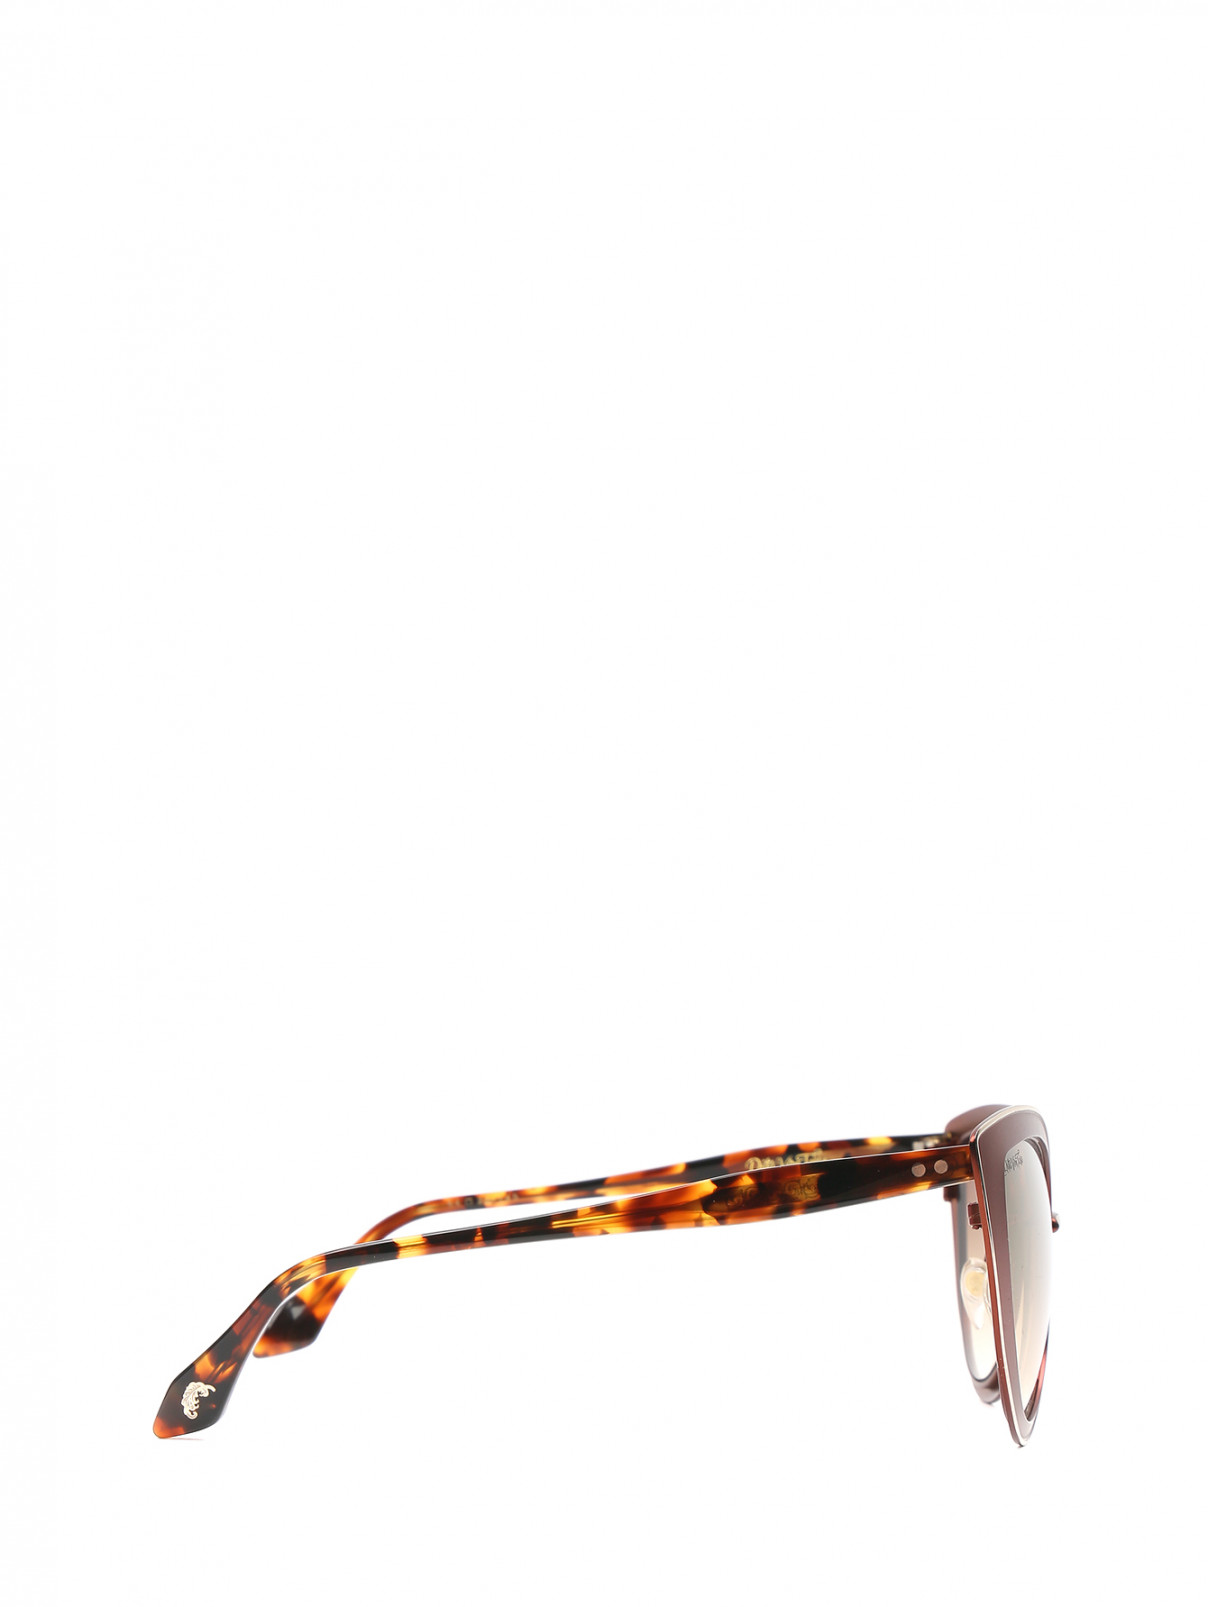 Cолнцезащитные очки в оправе из пластика и металла Dita  –  Обтравка2  – Цвет:  Металлик